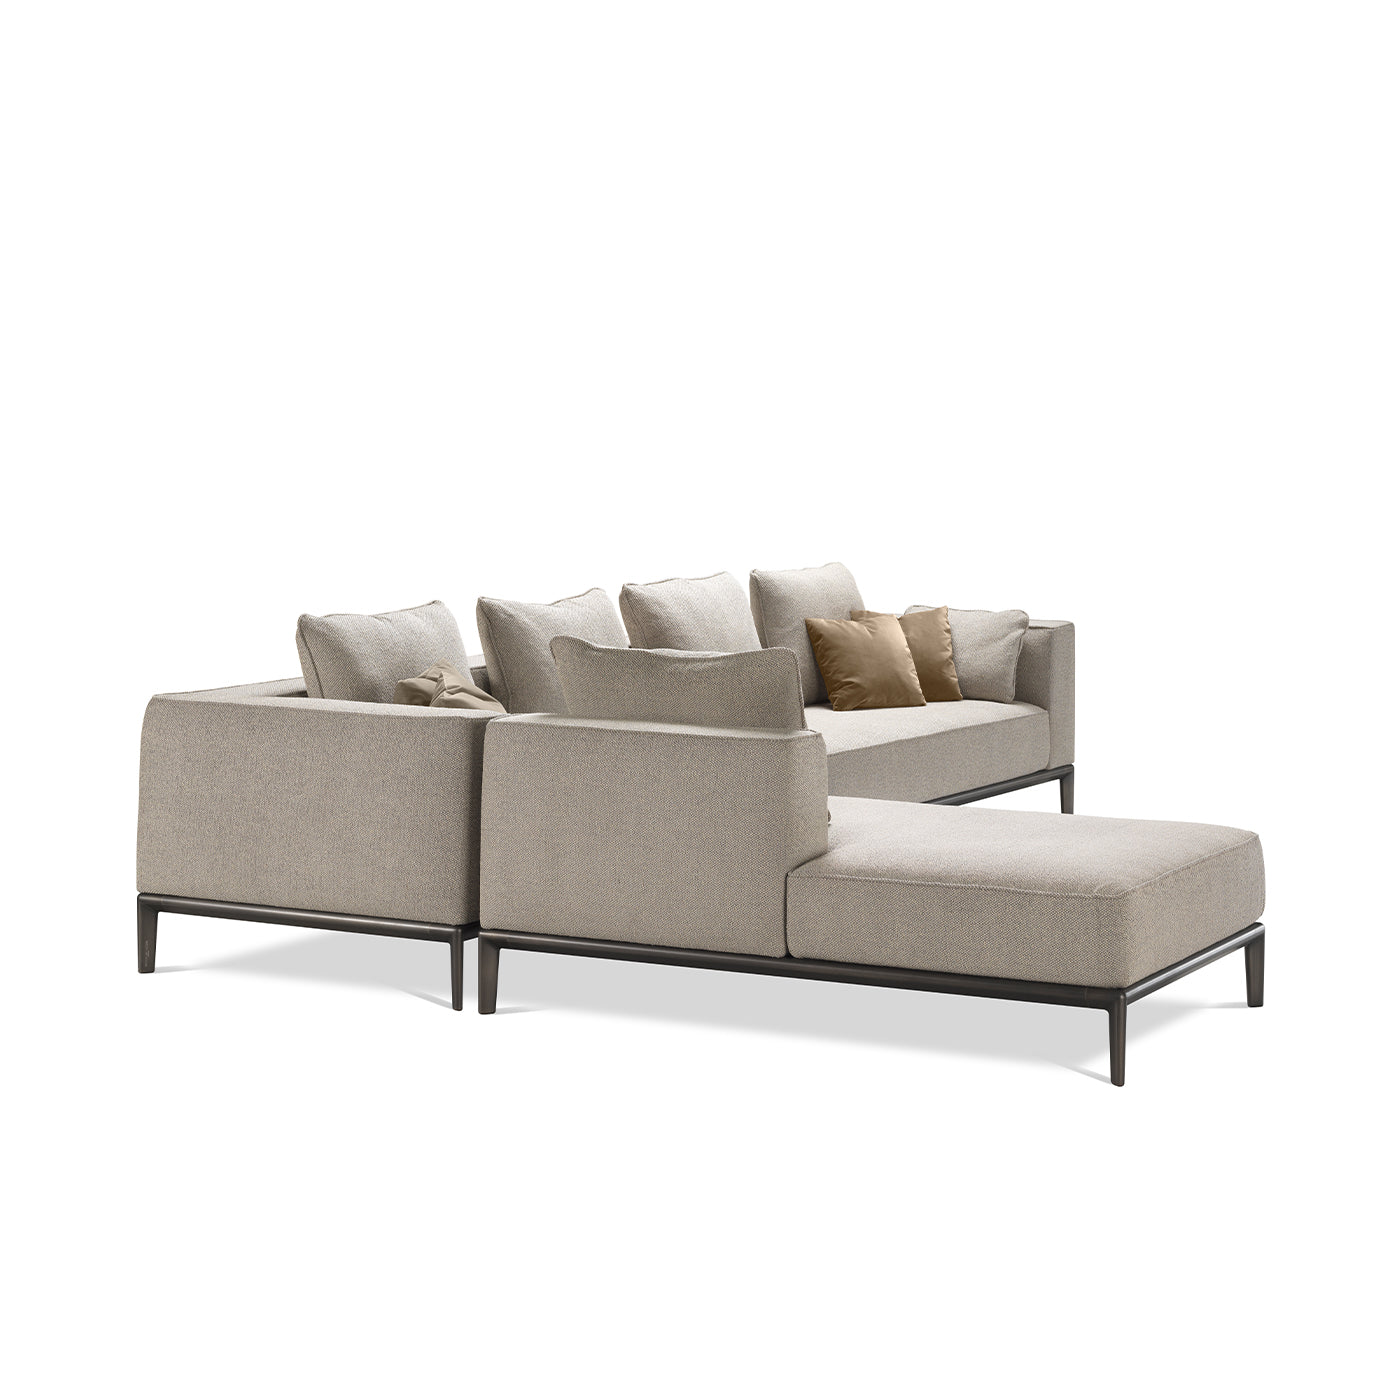 Milo Angular Off-White Sofa by Stefano Giovannoni - Alternative view 1